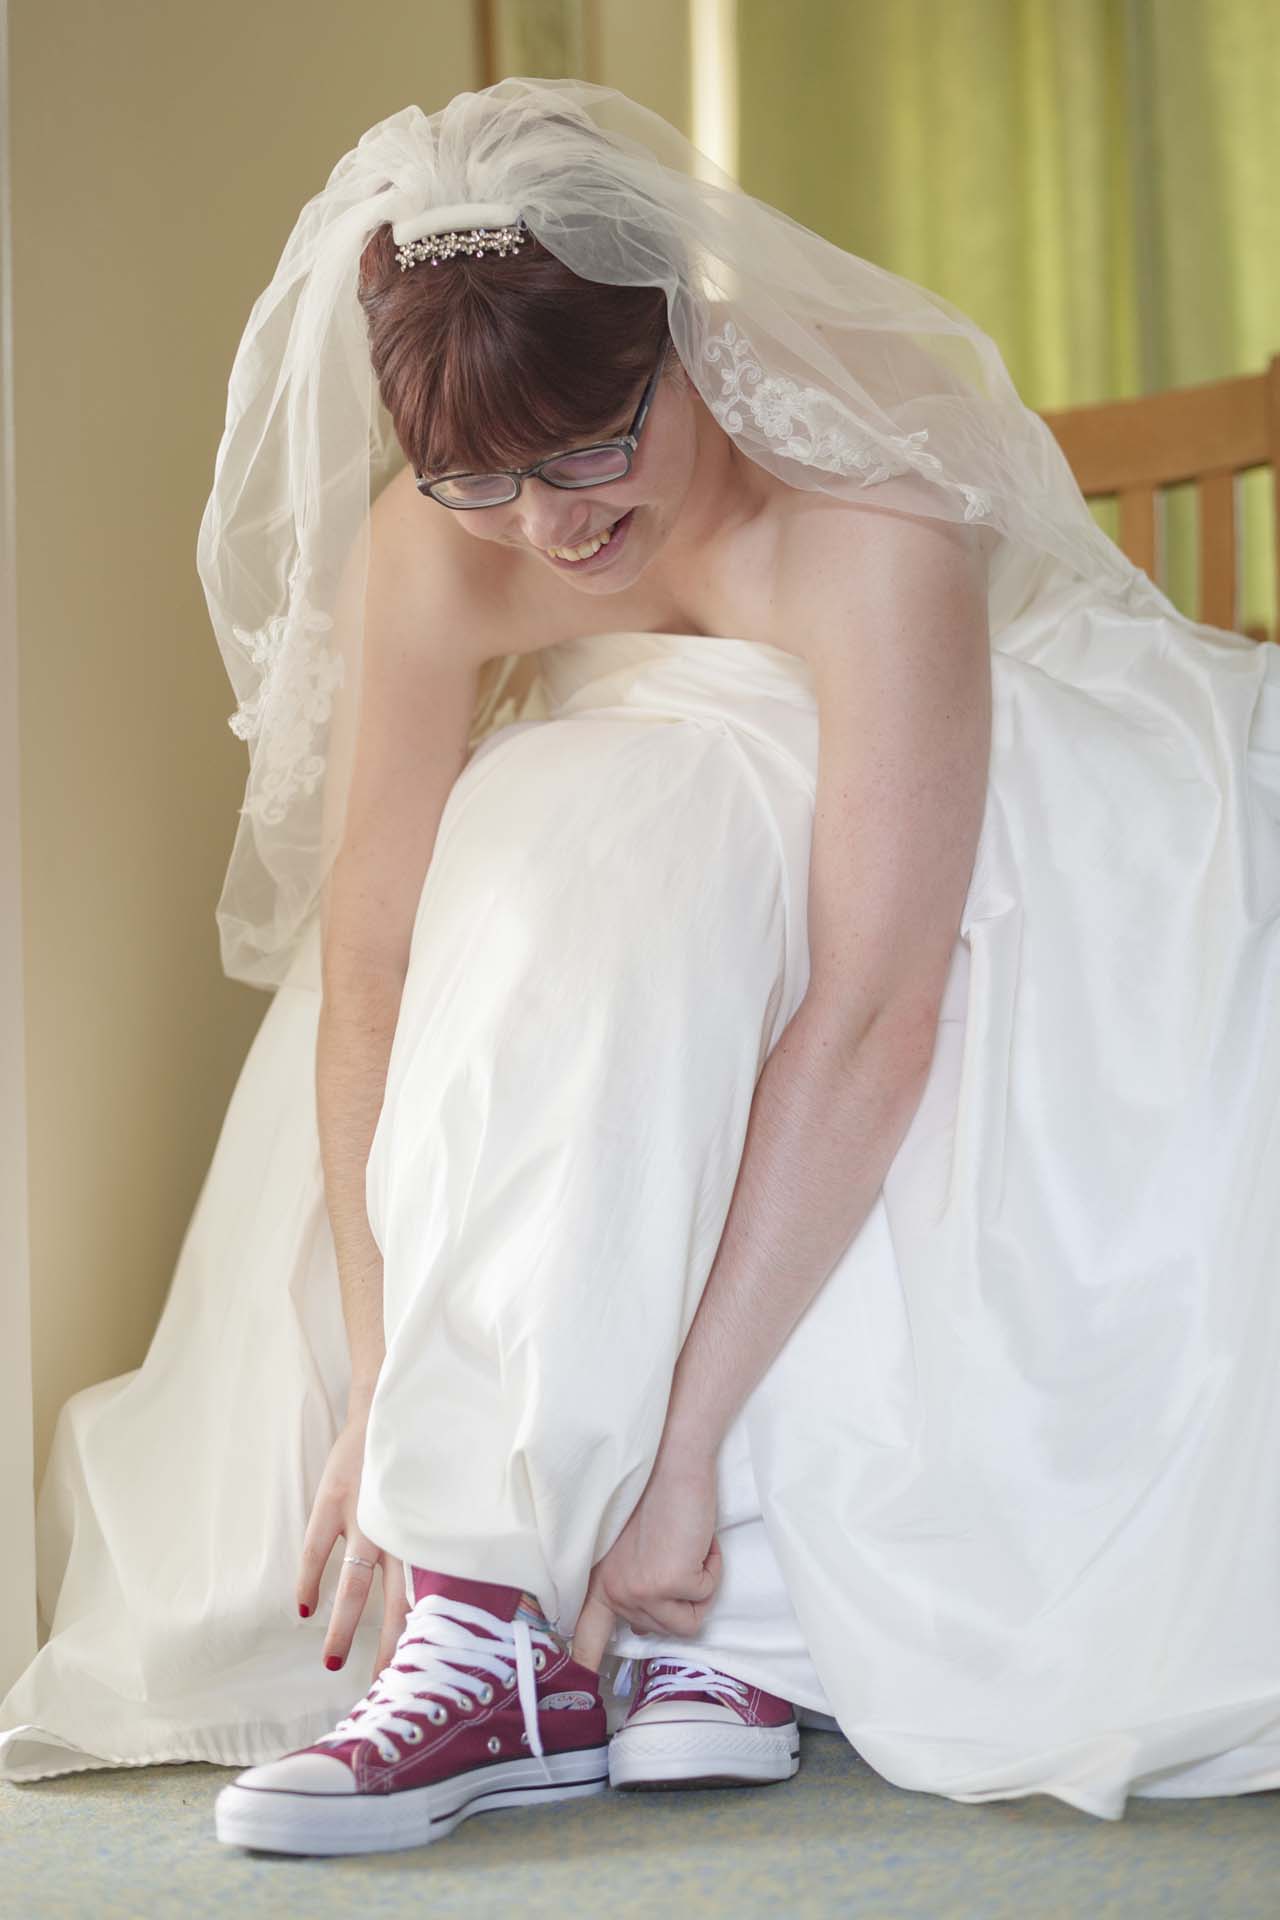 50mm nifty fifty lens wedding photographer 114517 Canterbury Kent Wedding Bride preparations wedding dress